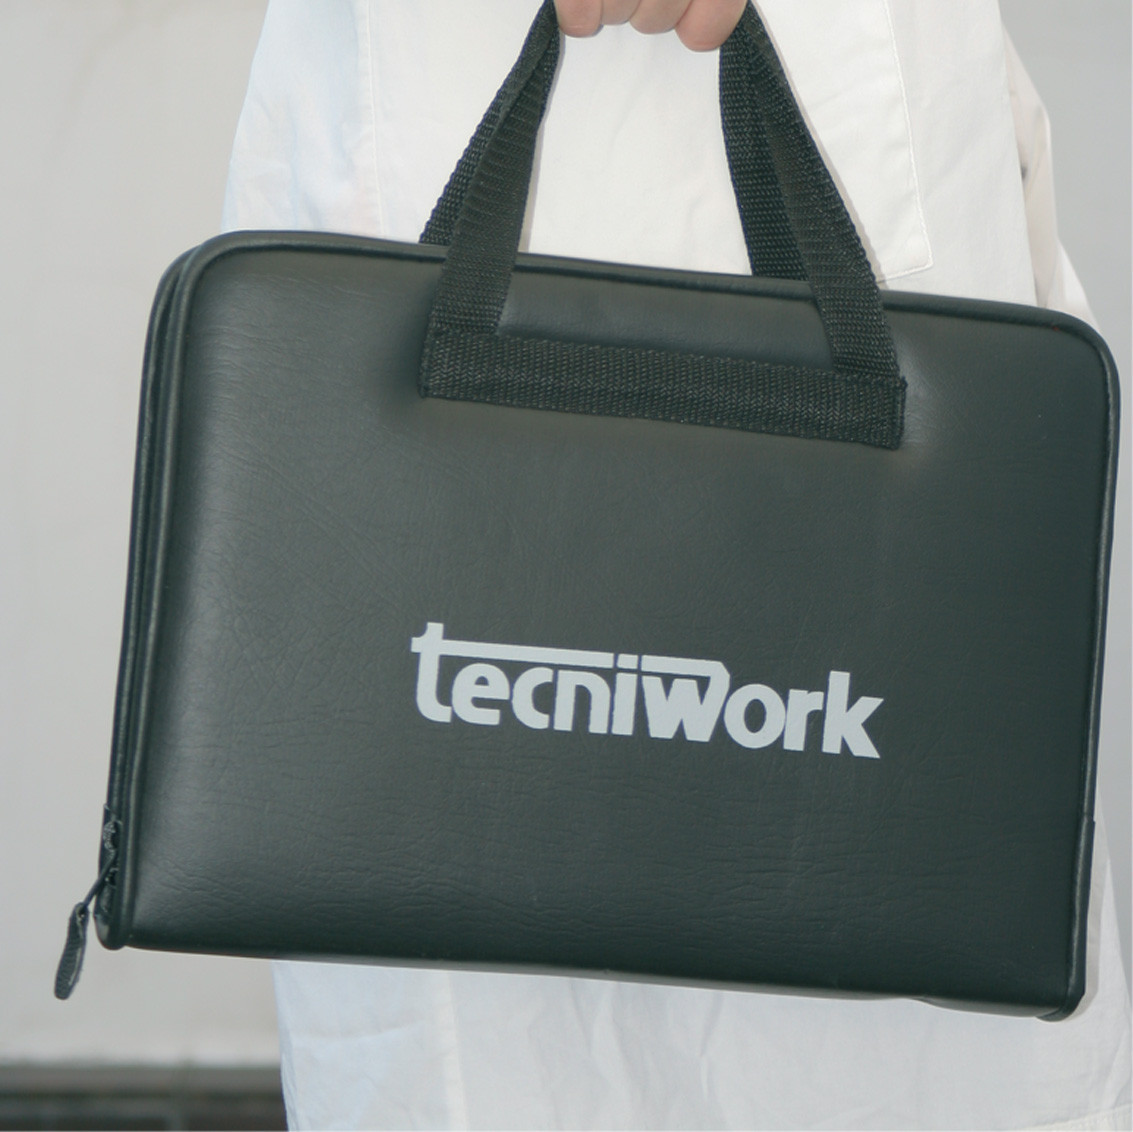 Valigetta nera porta strumenti con logo Tecniwork